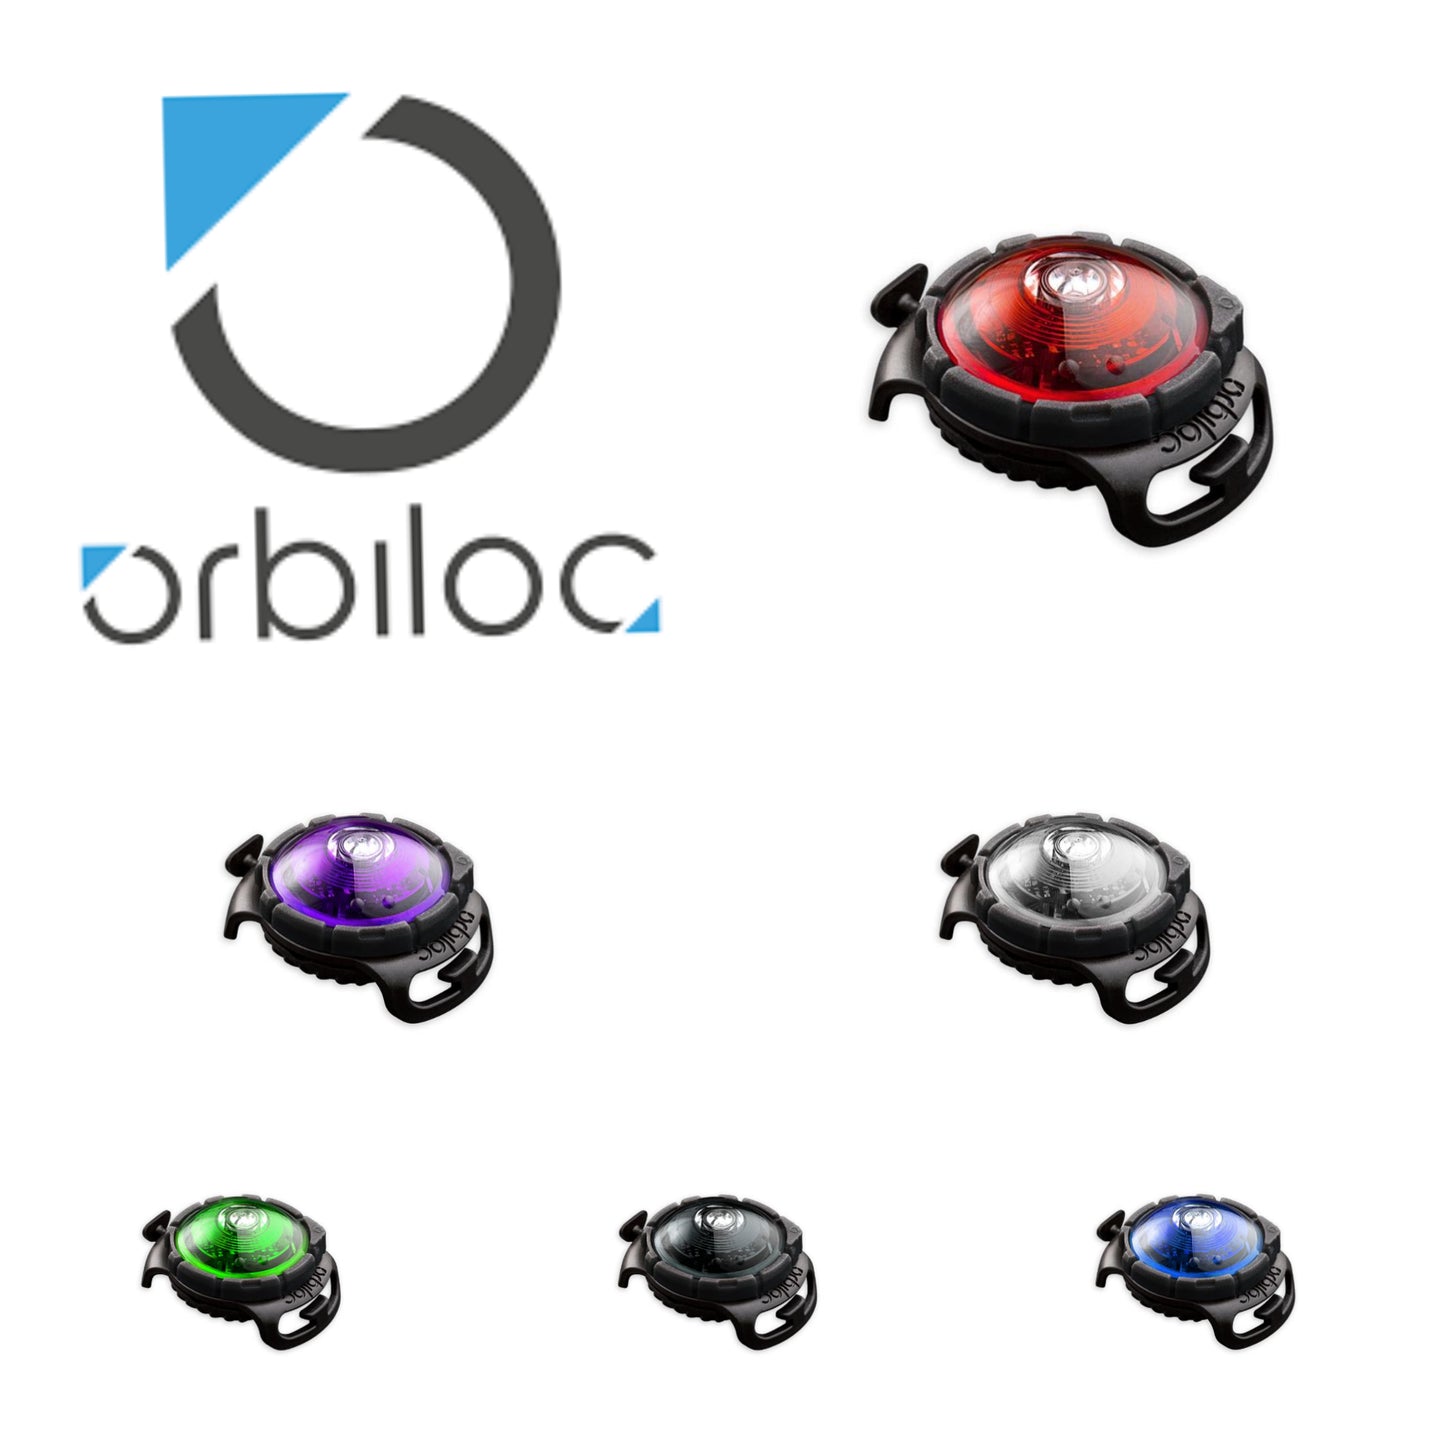 Orbiloc dual safety light